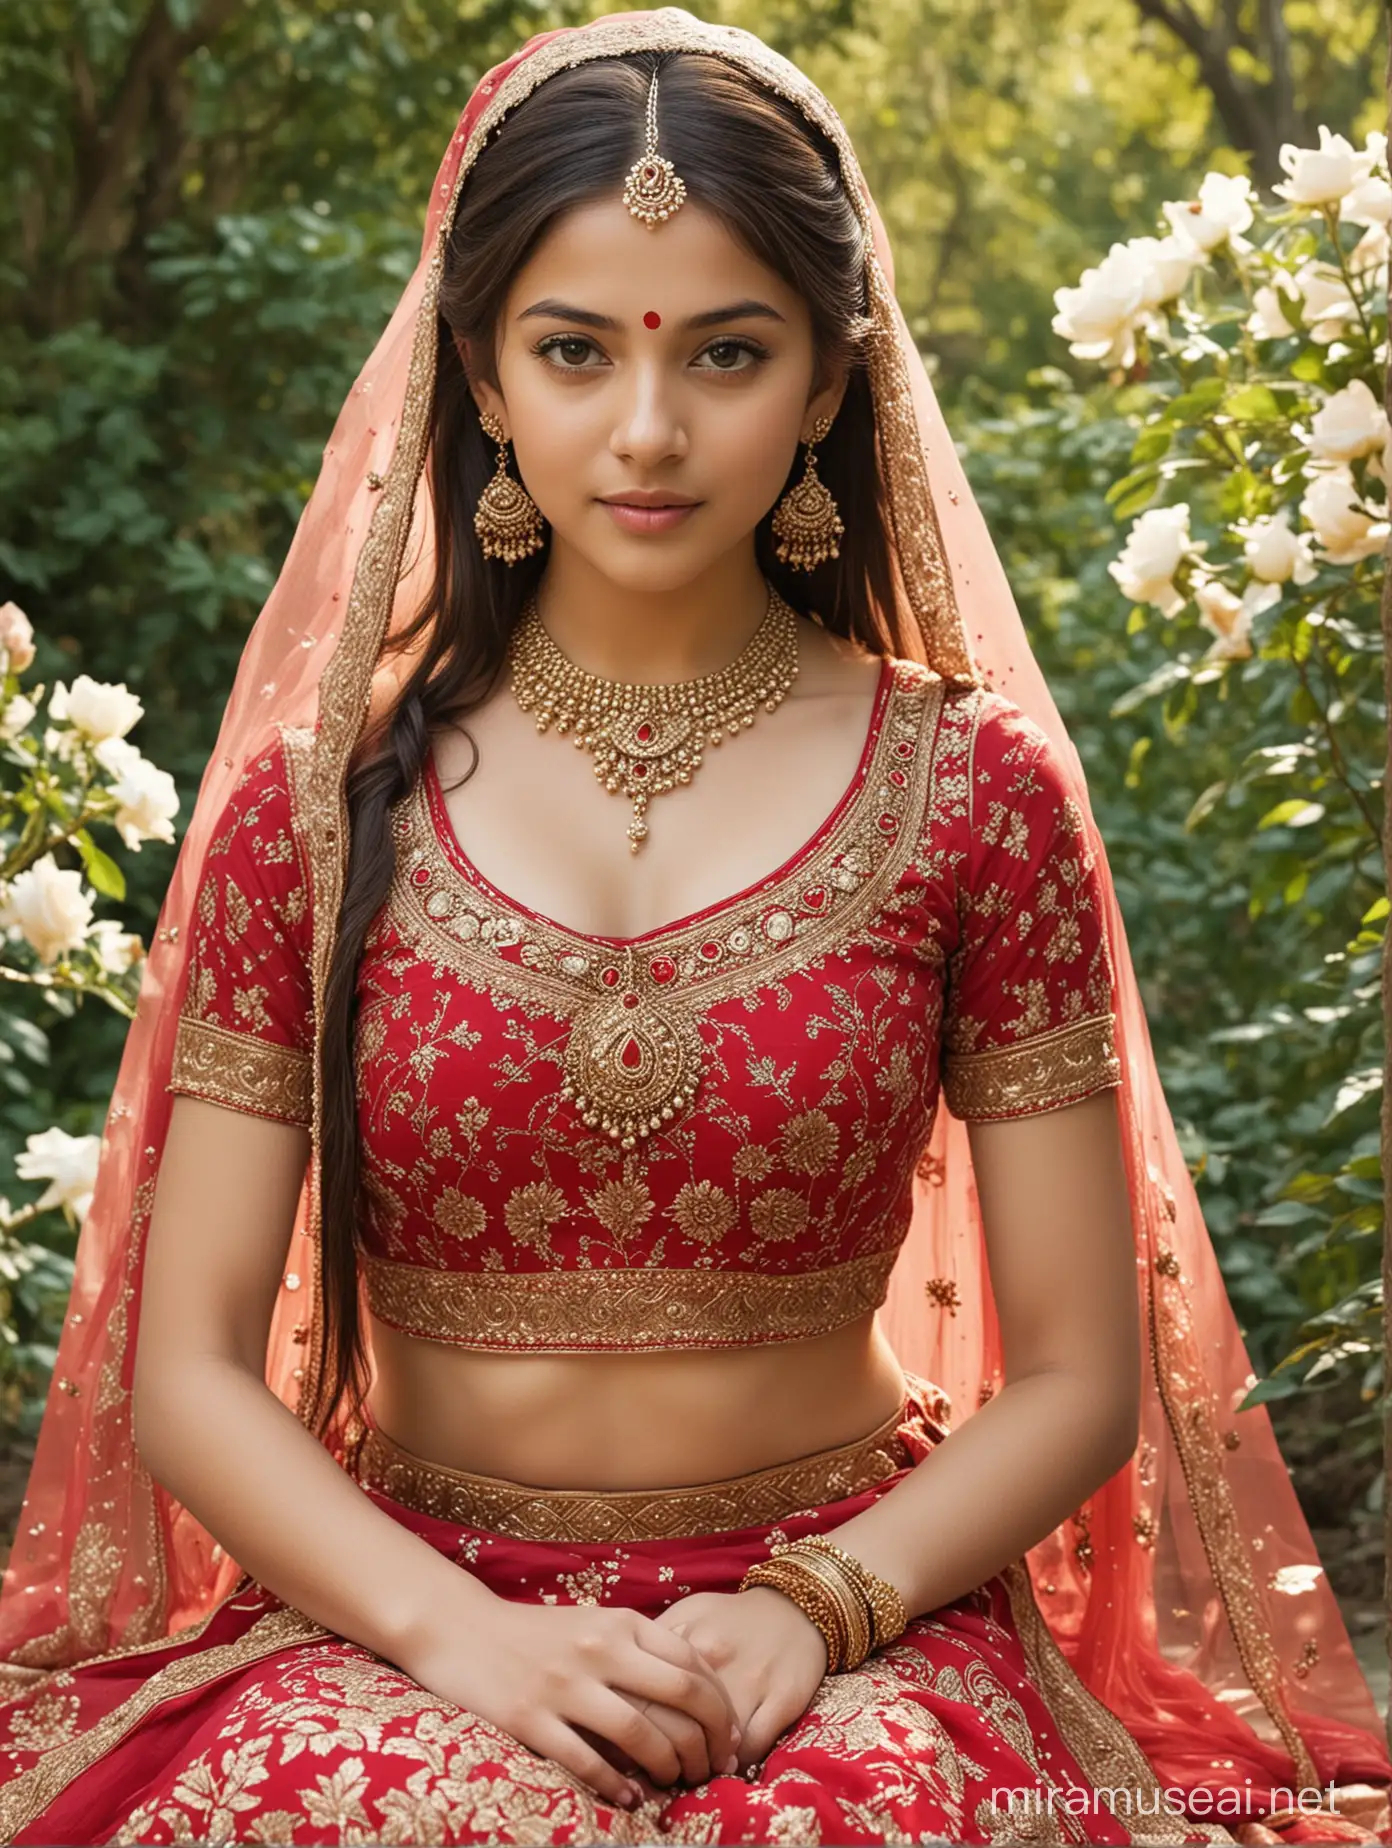 Graceful Indian Girl in Rose Red Lehenga Radiant Beauty in Serene Natural Setting